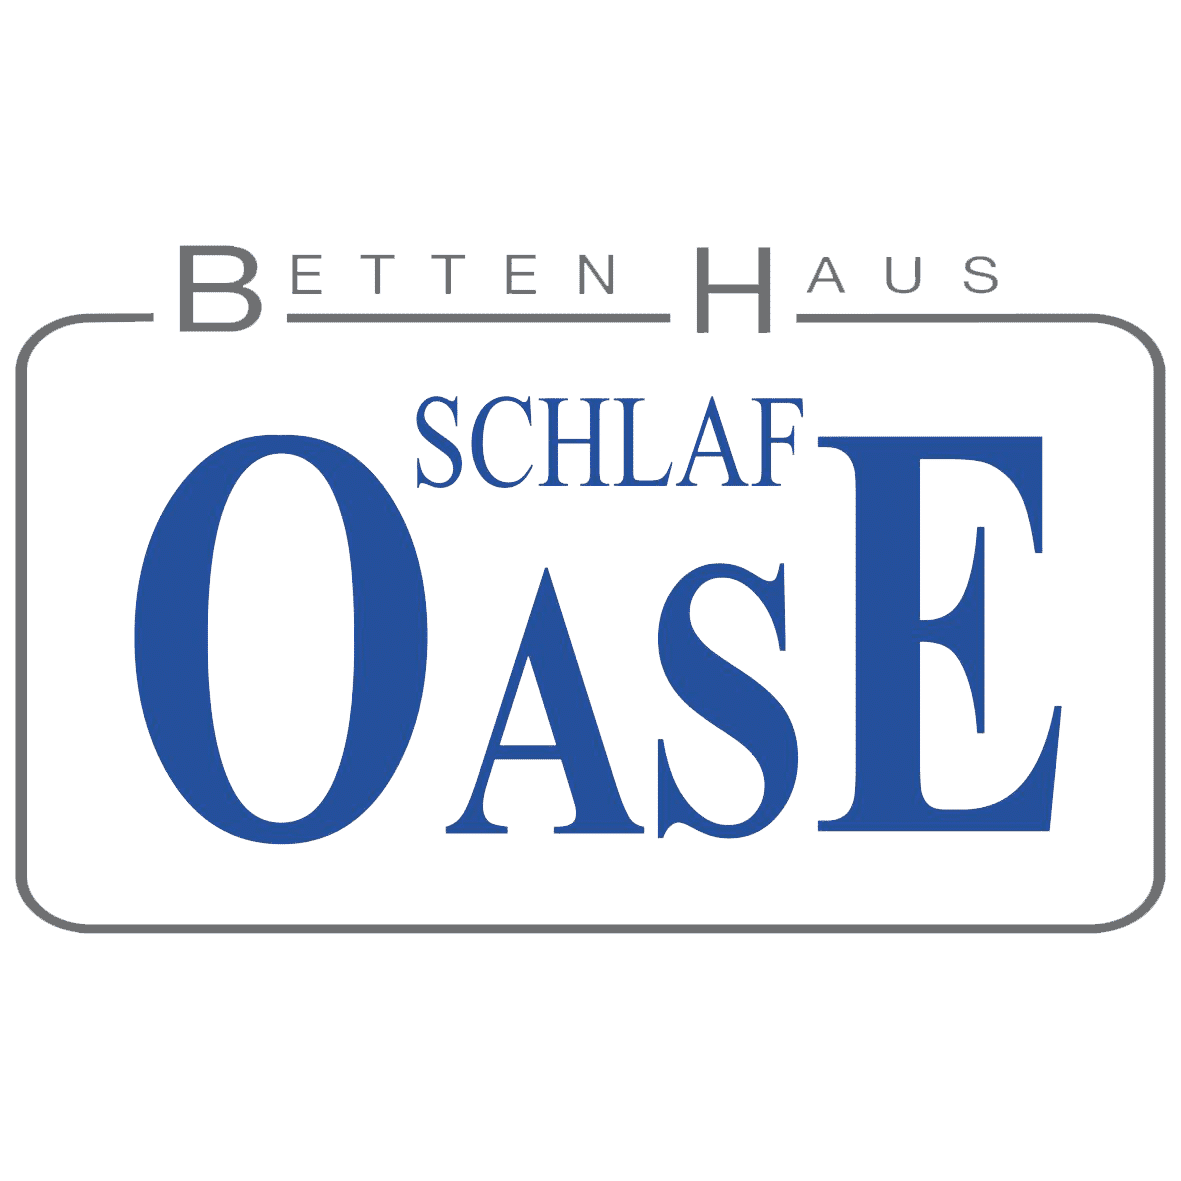 Bettenhaus Schlafoase in Nürnberg - Logo